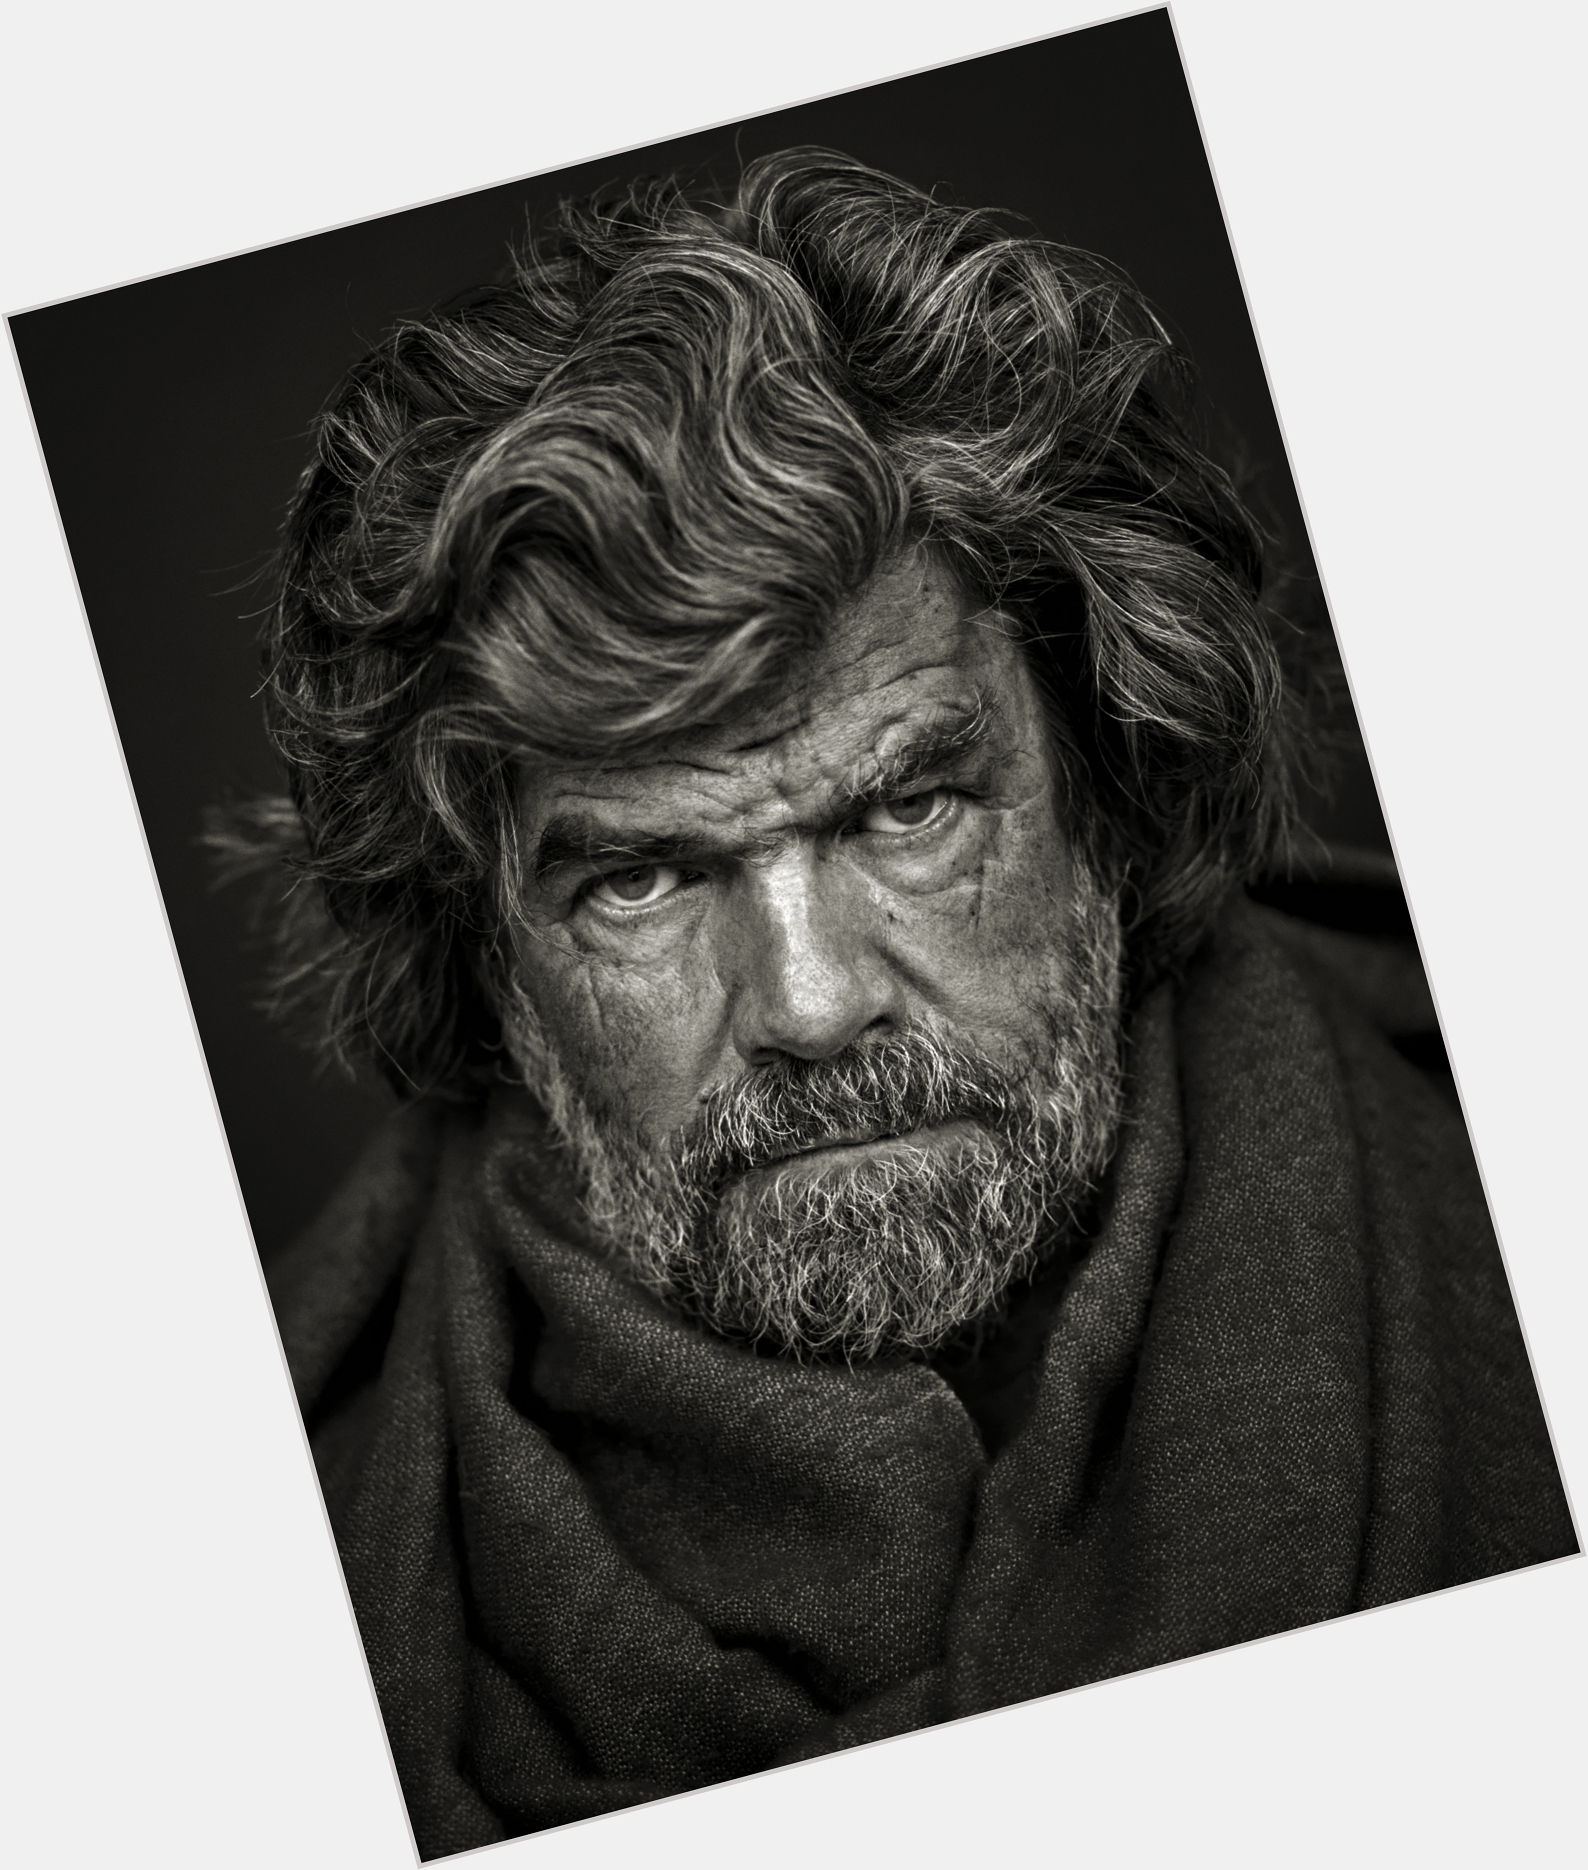 Reinhold Messner exclusive hot pic 6.jpg